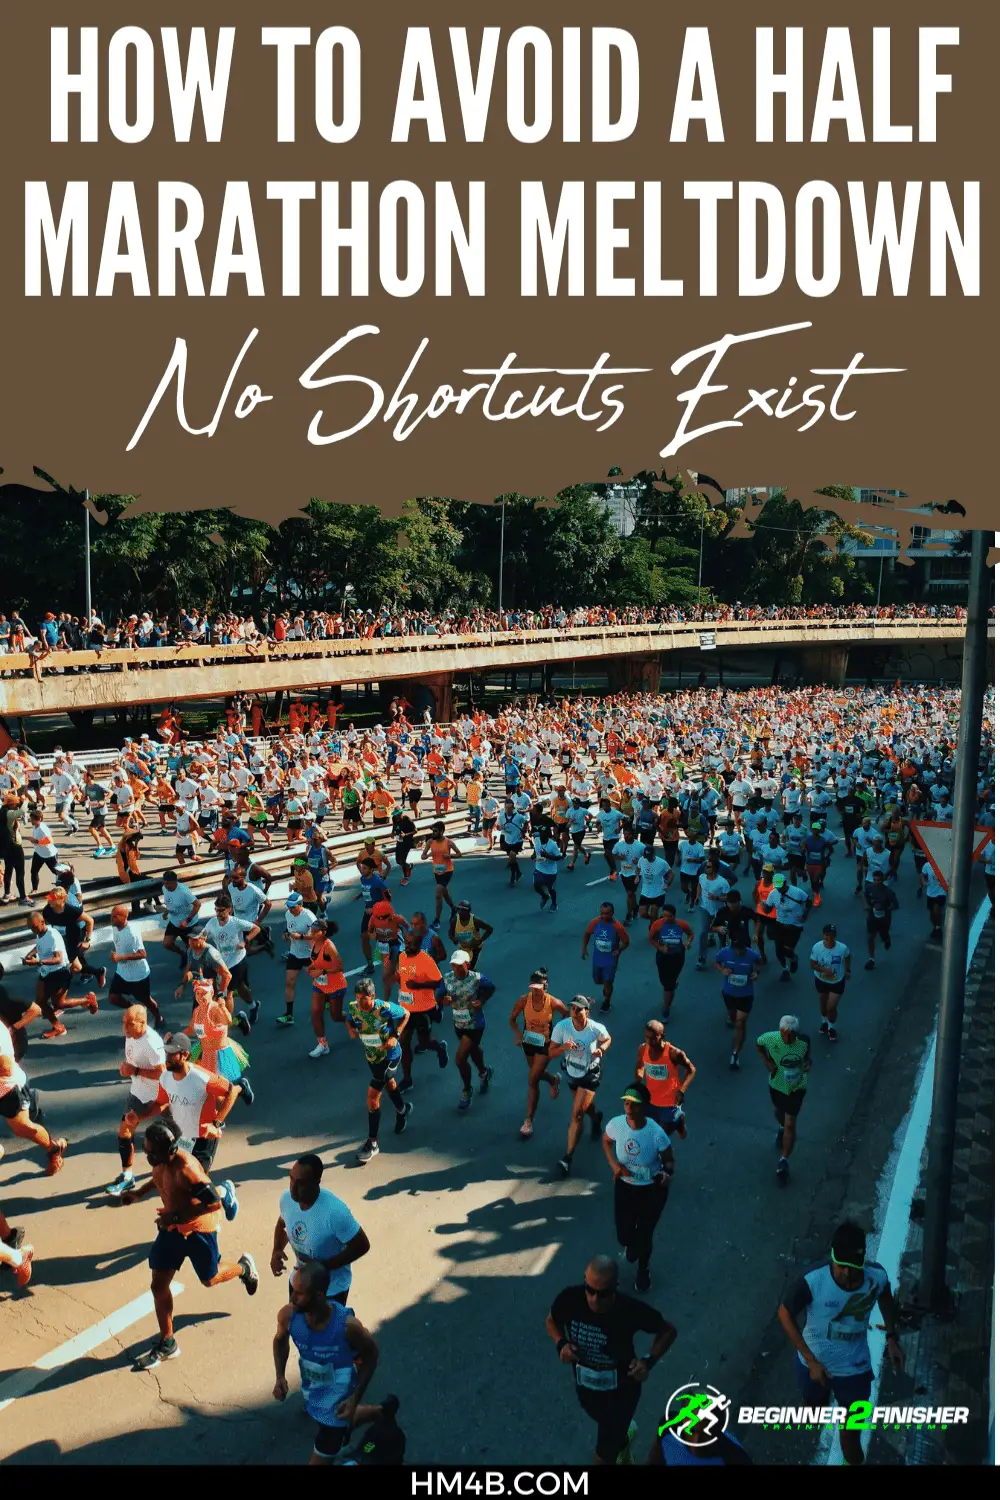 How to Avoid a Half Marathon Meltdown - No Shortcuts Exist